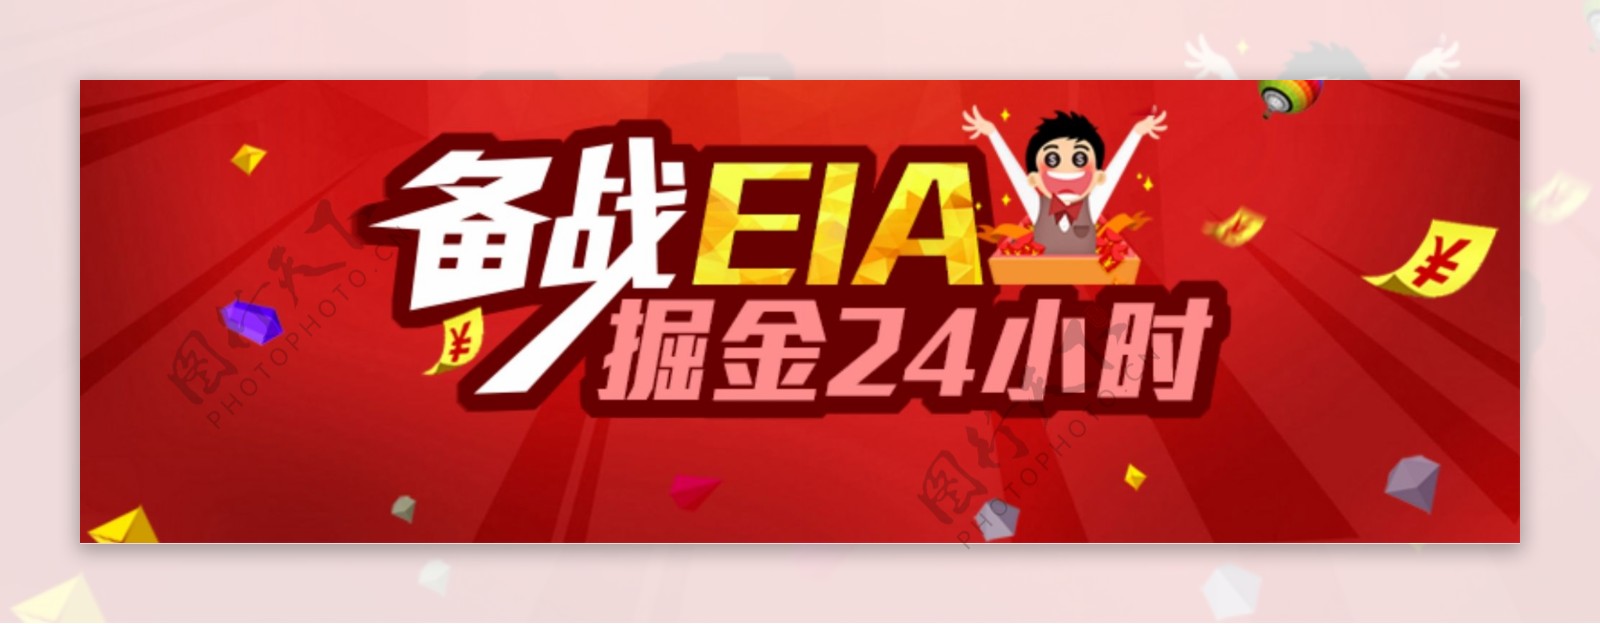 备战EIA商业banner